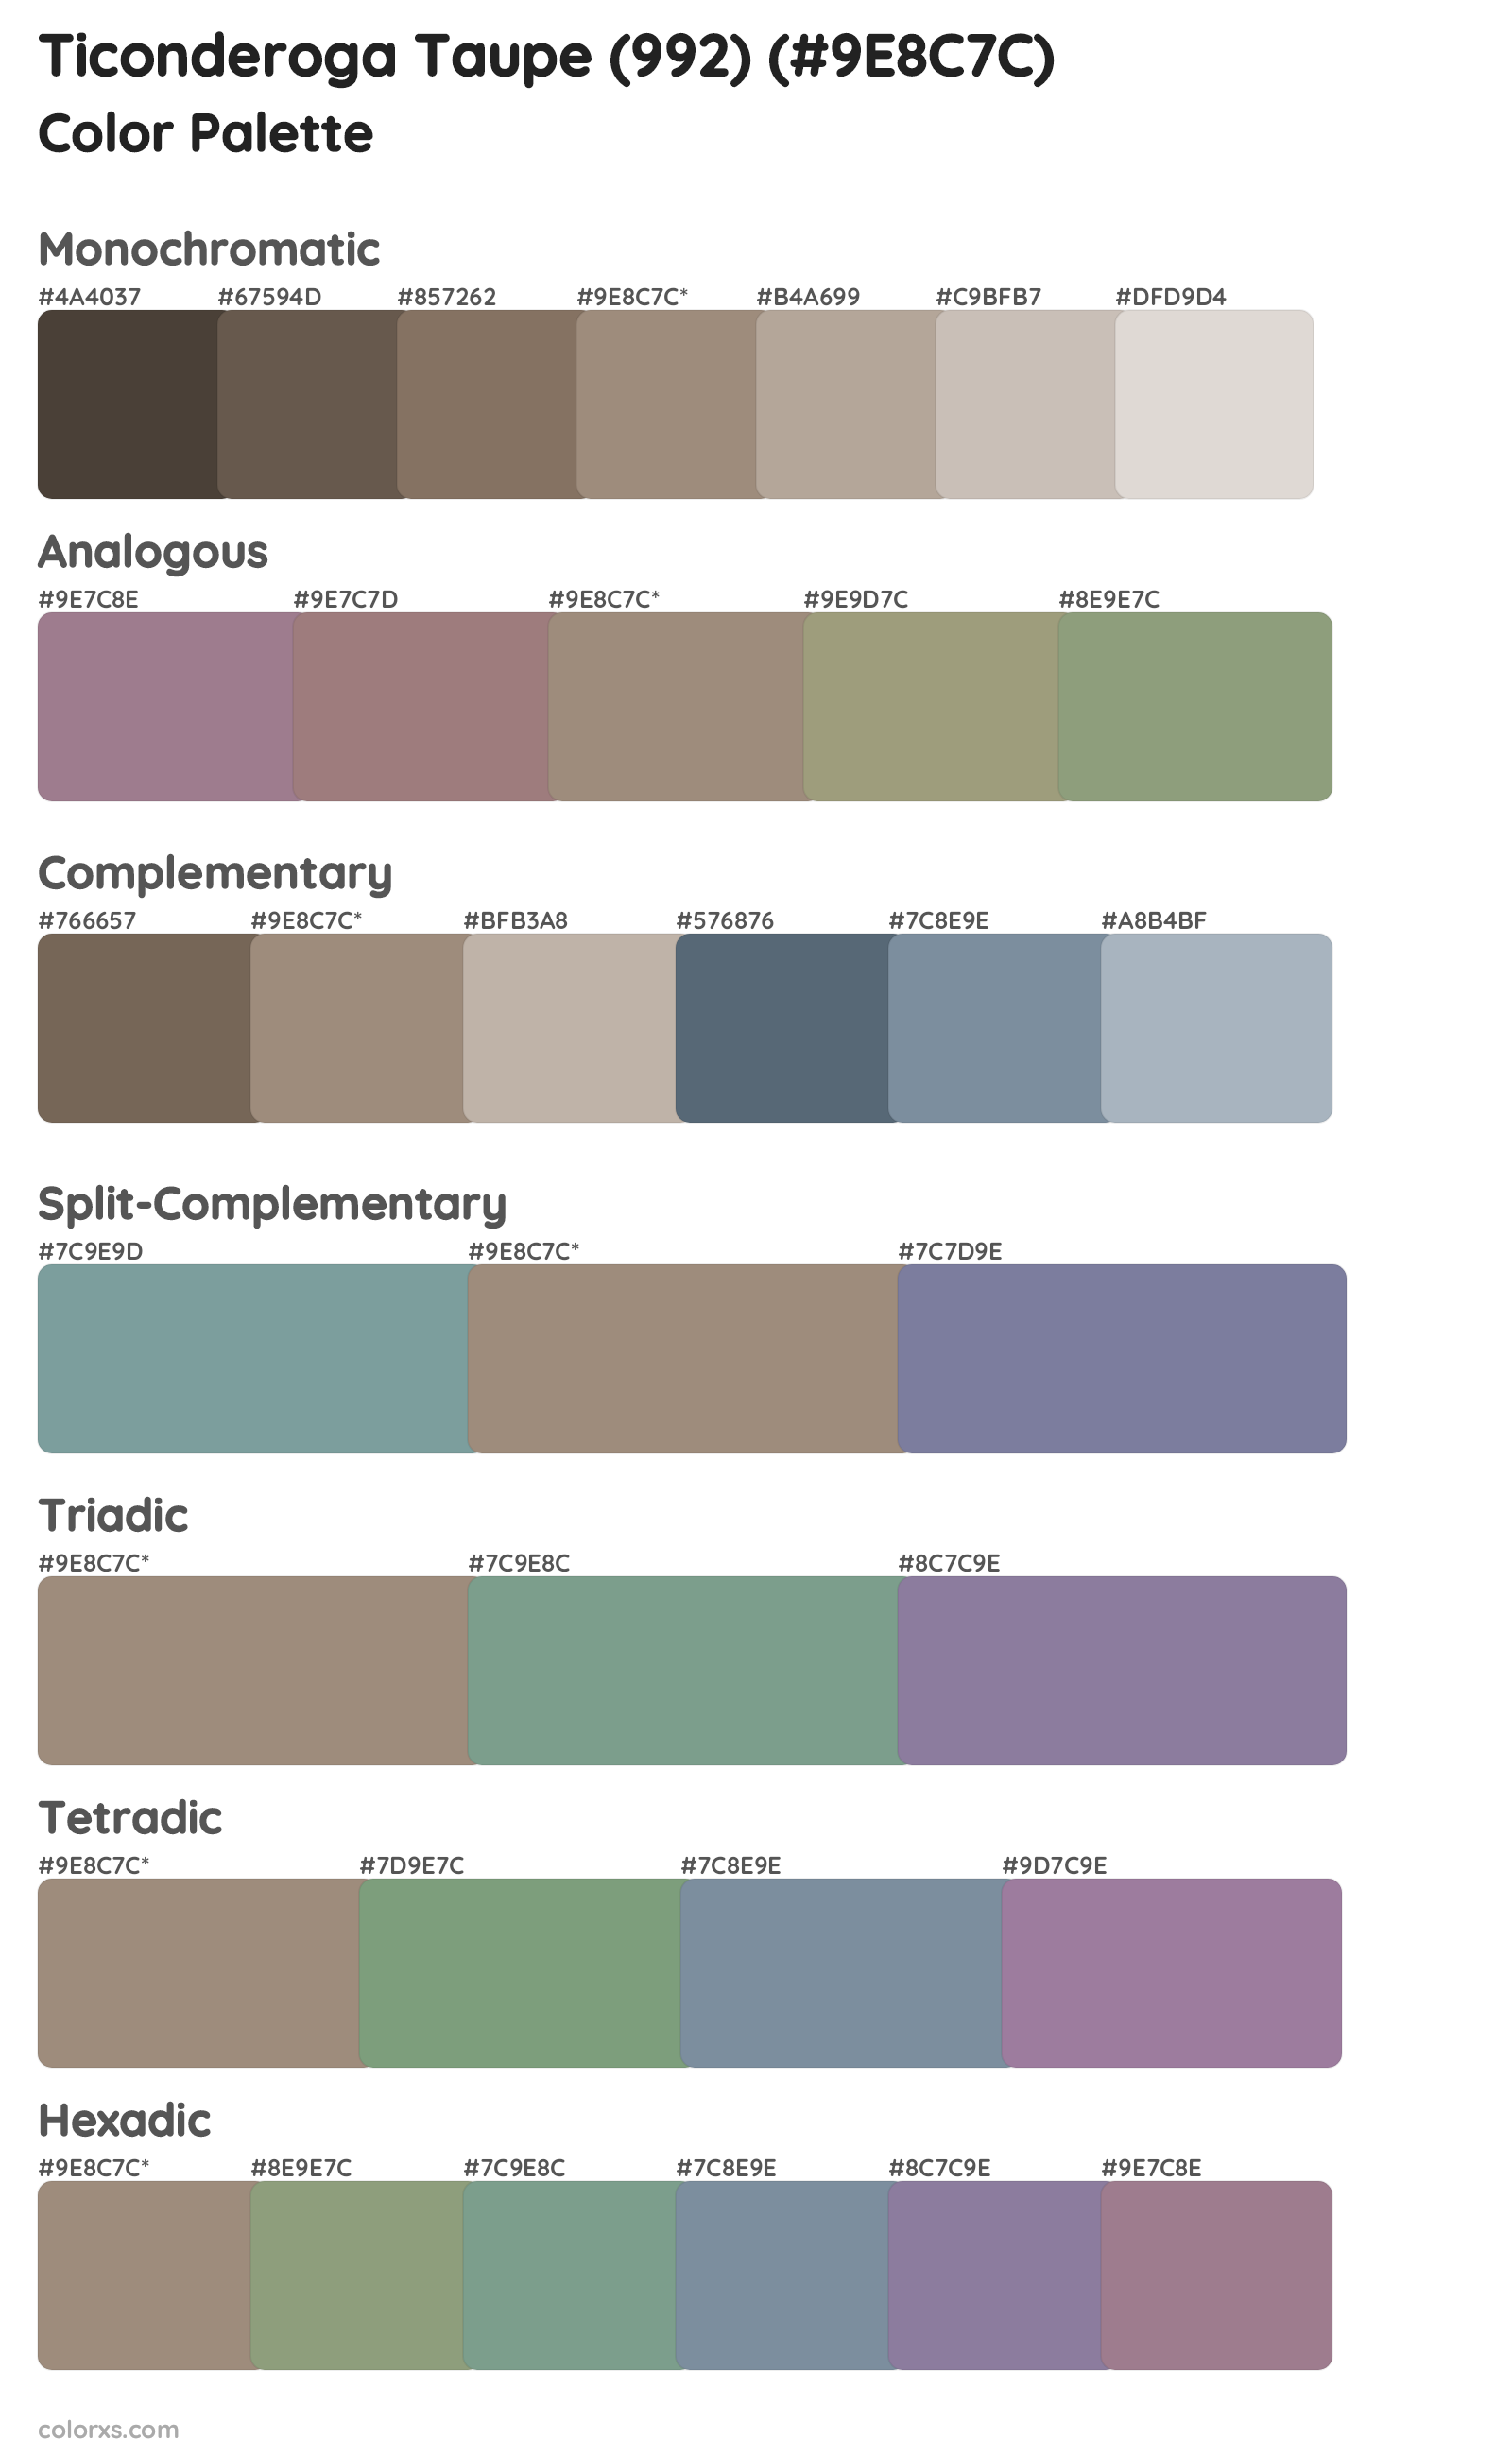 Ticonderoga Taupe (992) Color Scheme Palettes